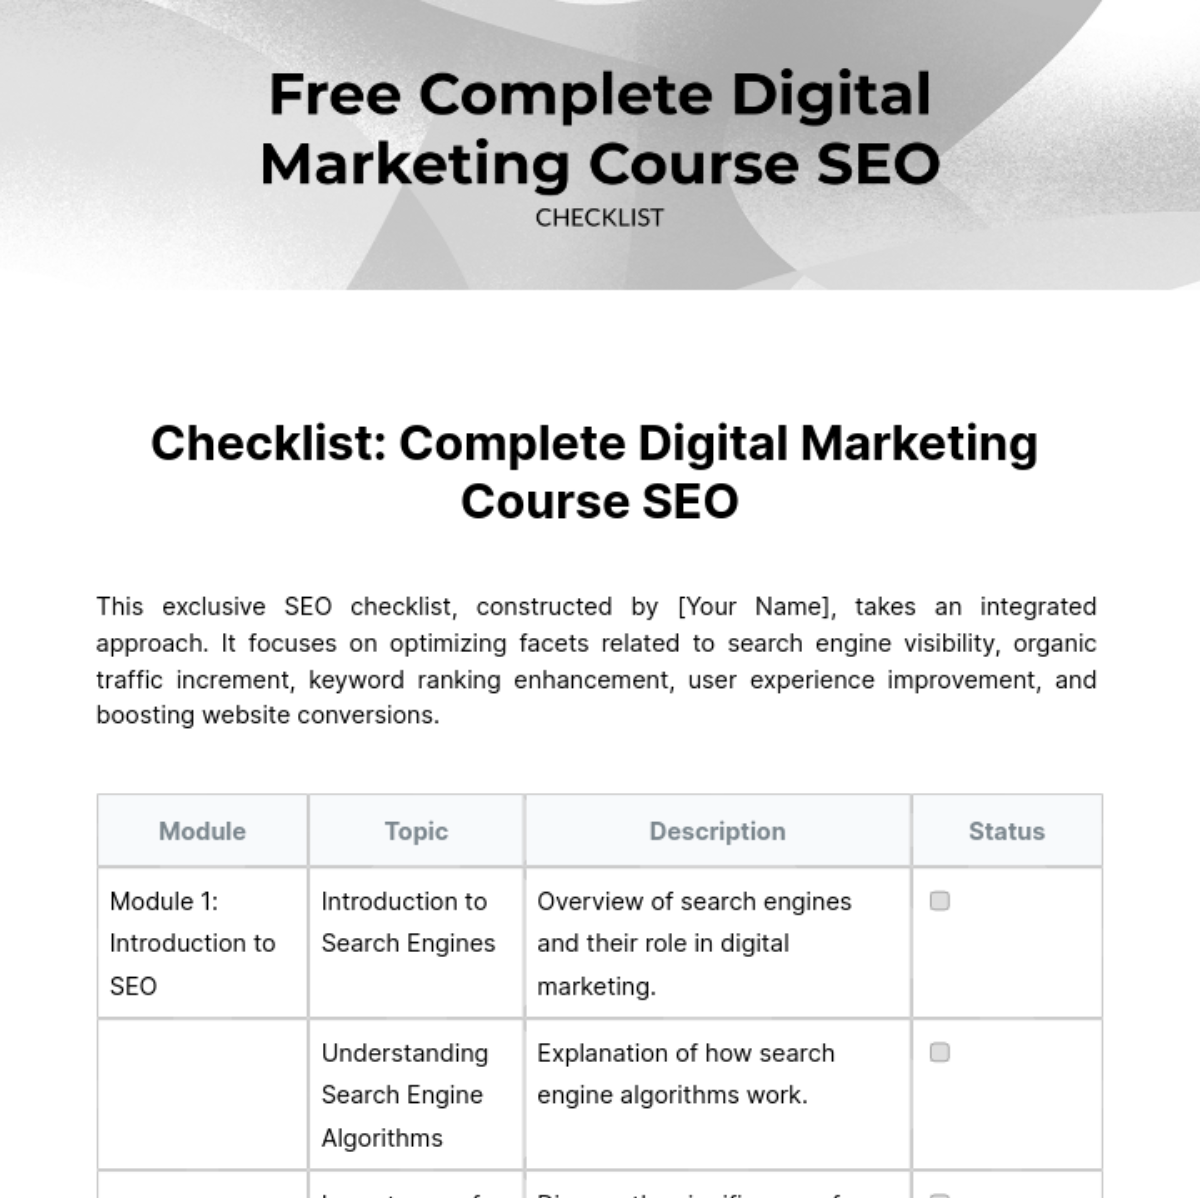 Free Complete Digital Marketing Course SEO Checklist Template